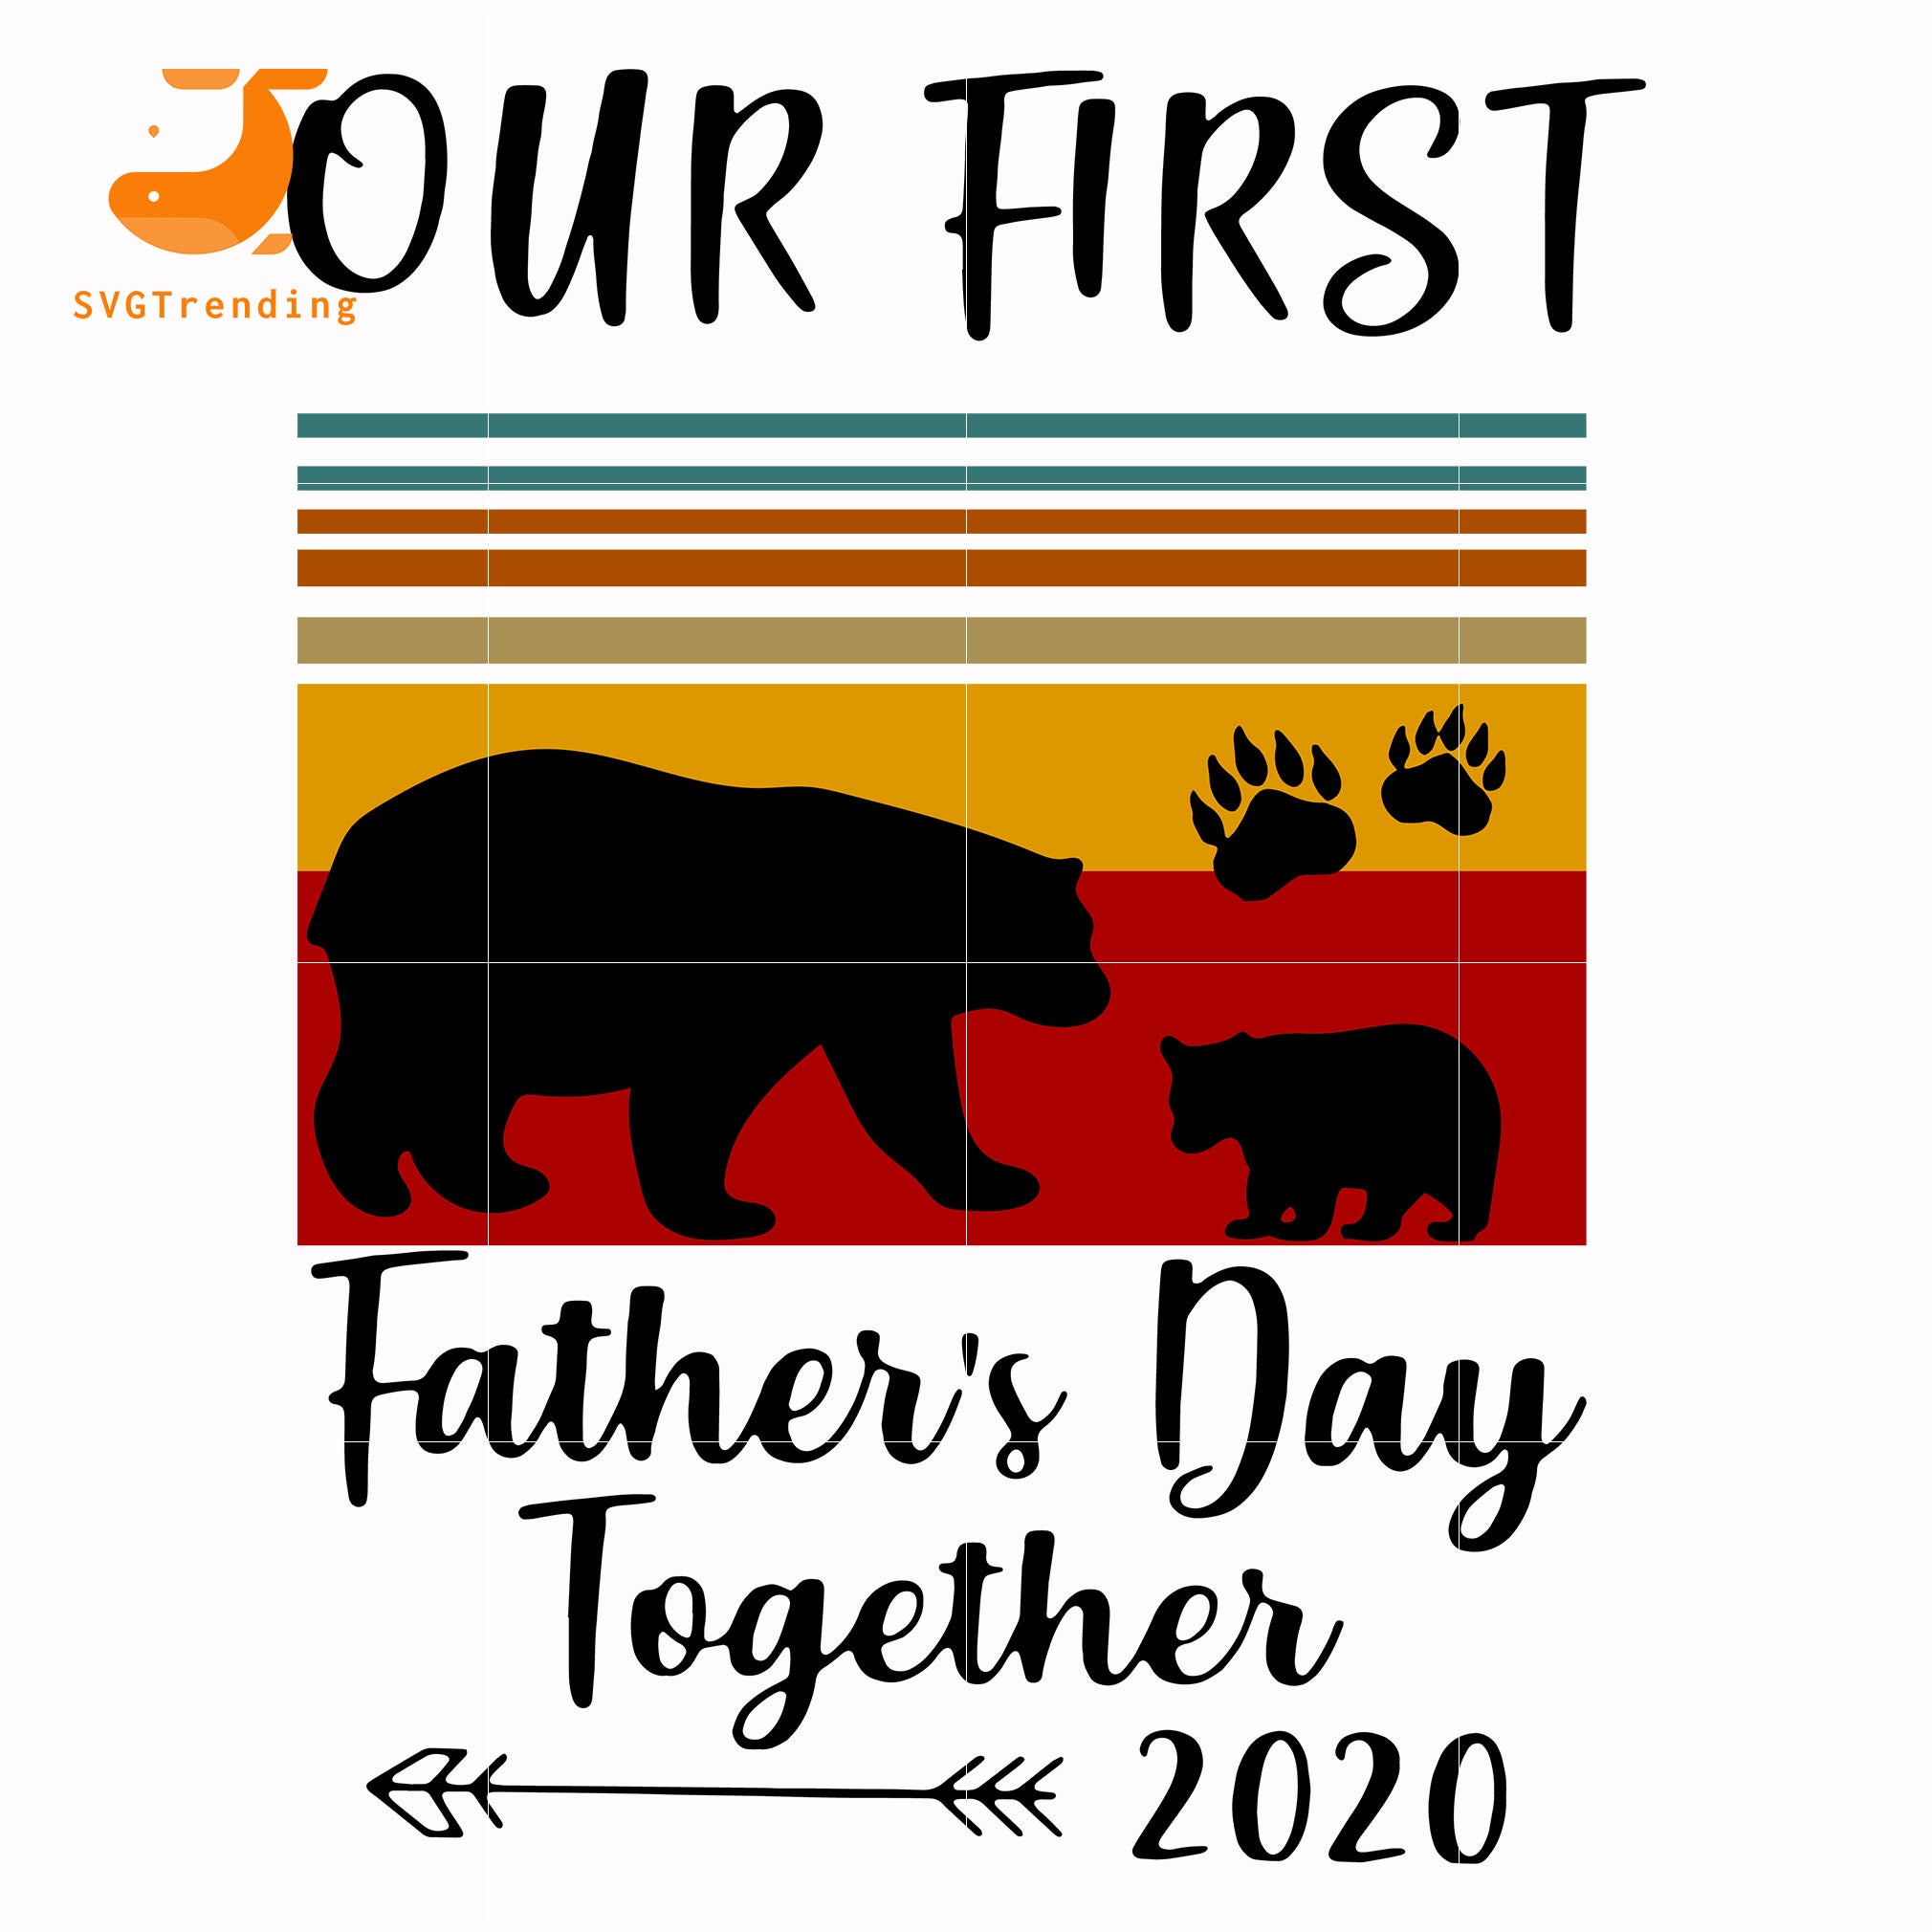 Download Our First Father Day Together Svg Png Dxf Eps Digital File Ftd151 Svgtrending